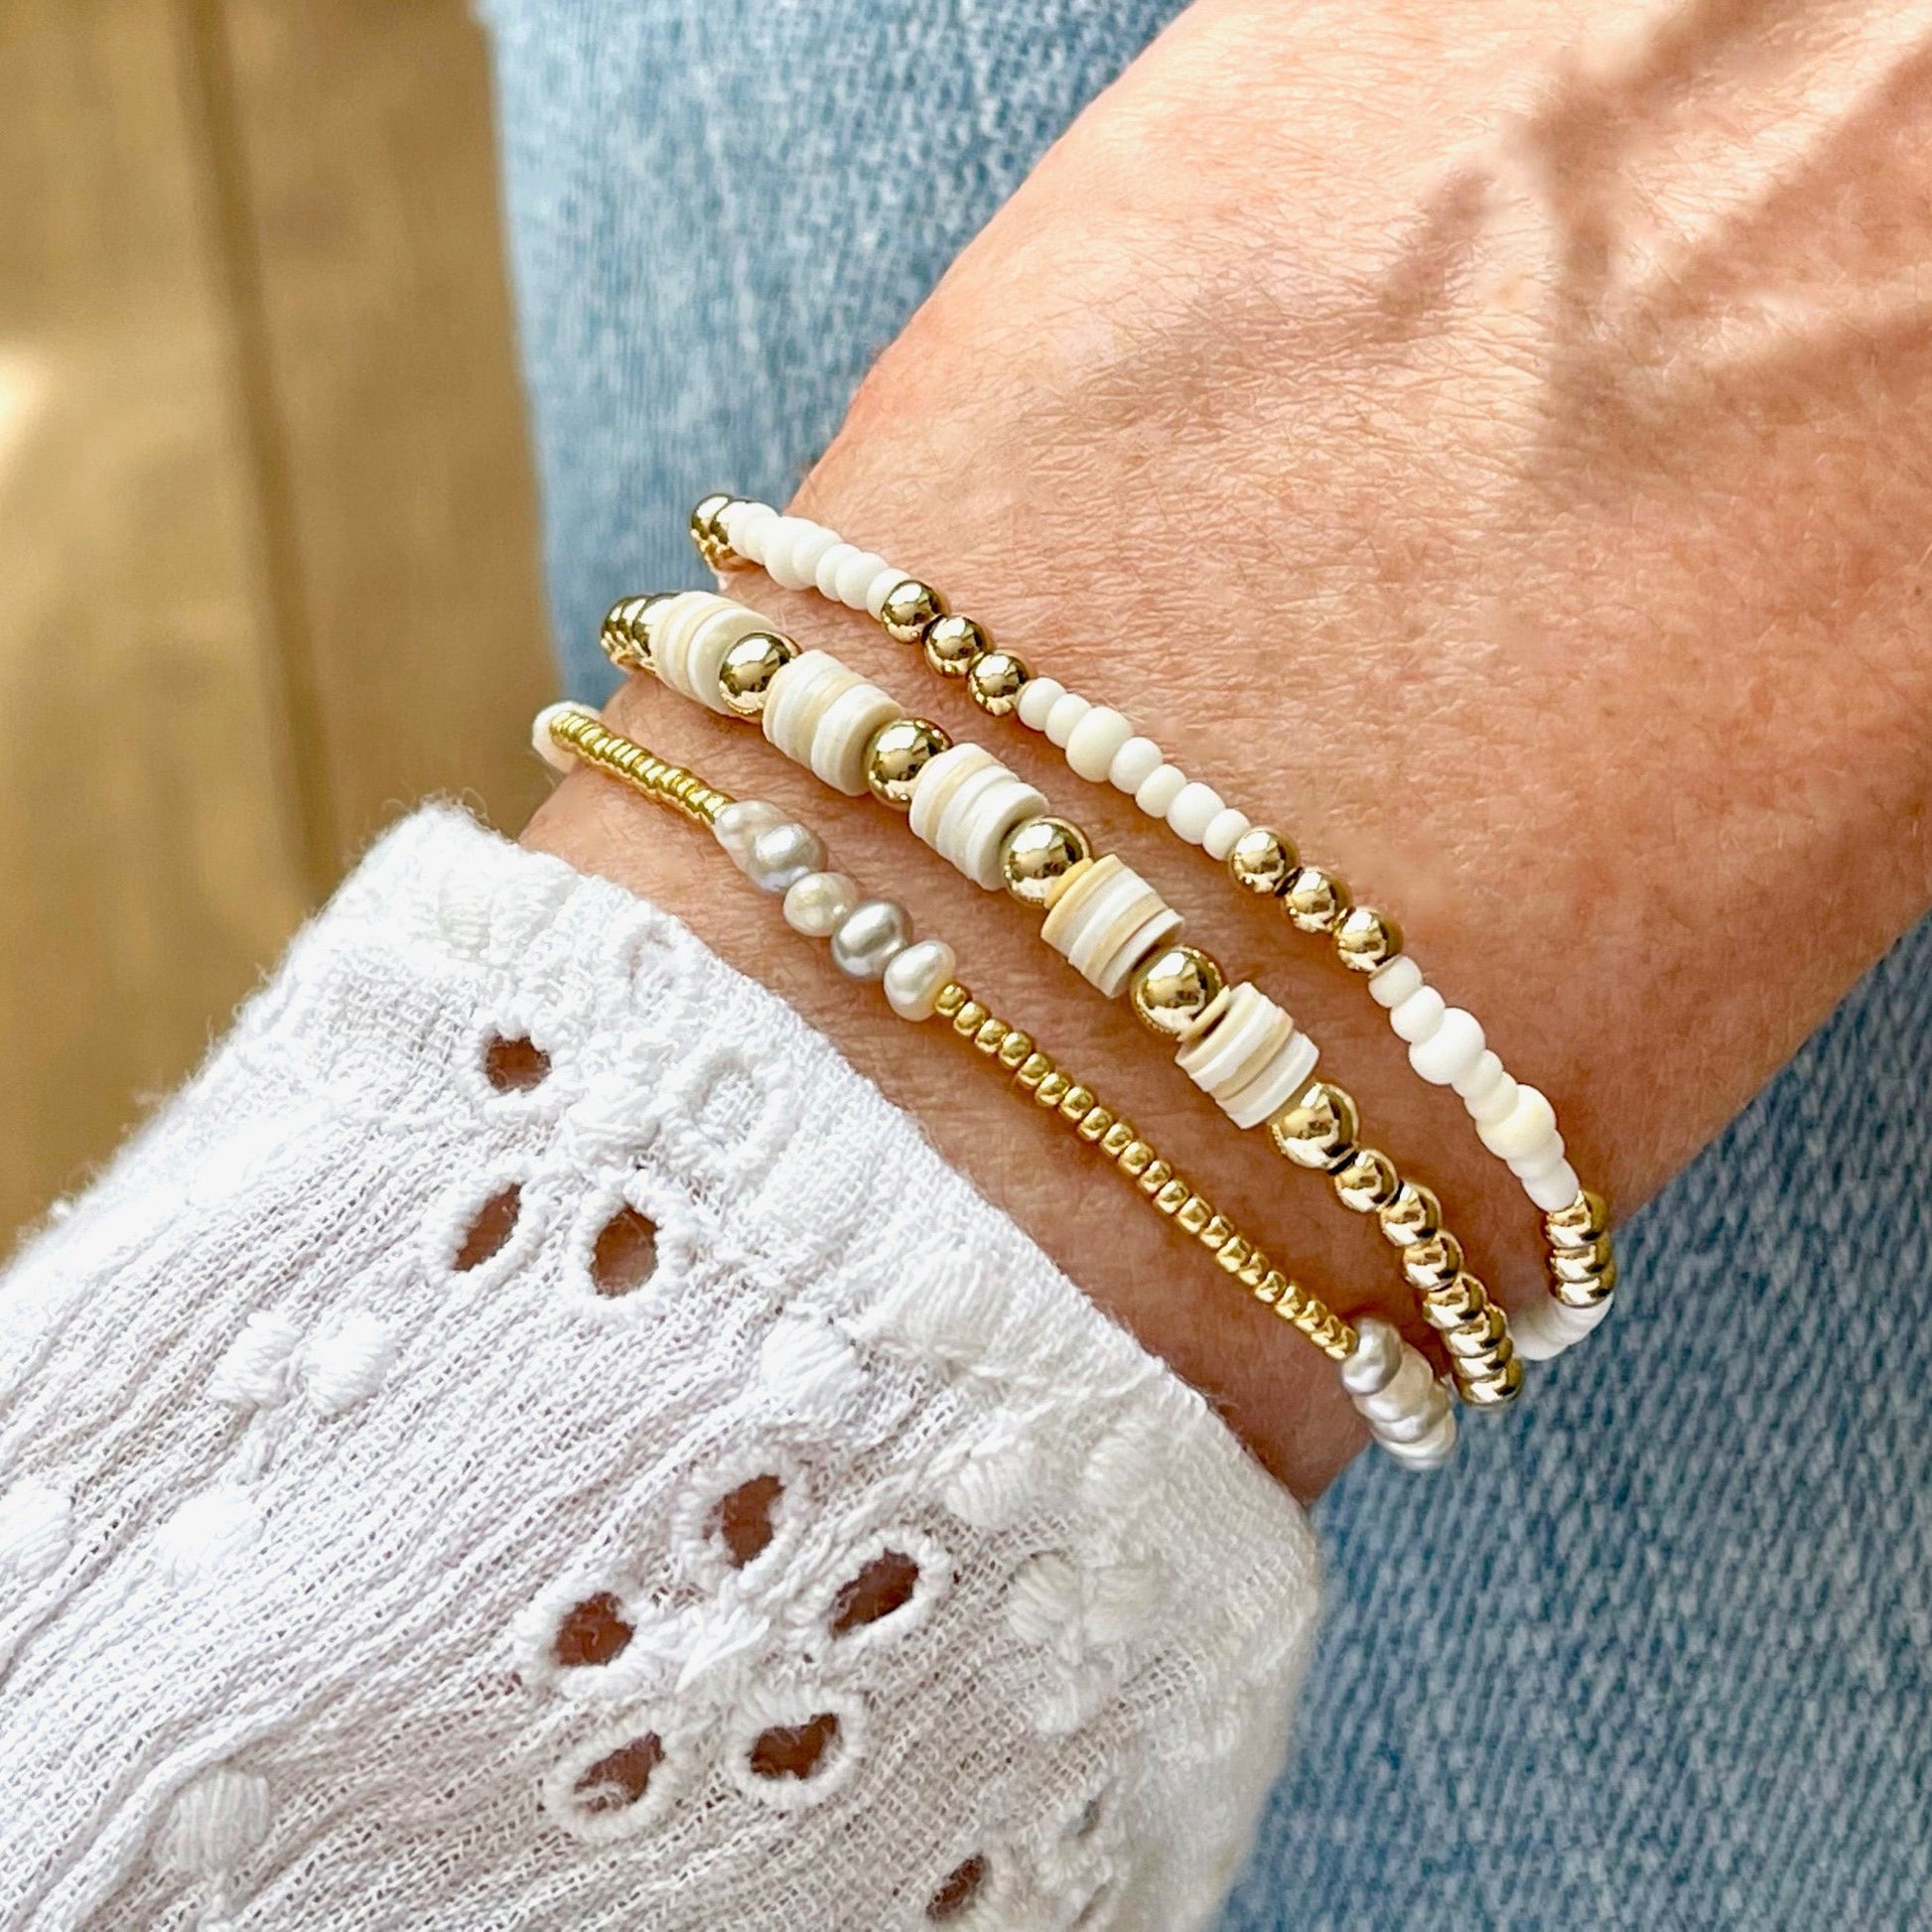 Heishi bead bracelet, freshwater pearl bracelet, and white beaded bracelet with gold beads. Set of 3 stretch bracelets.